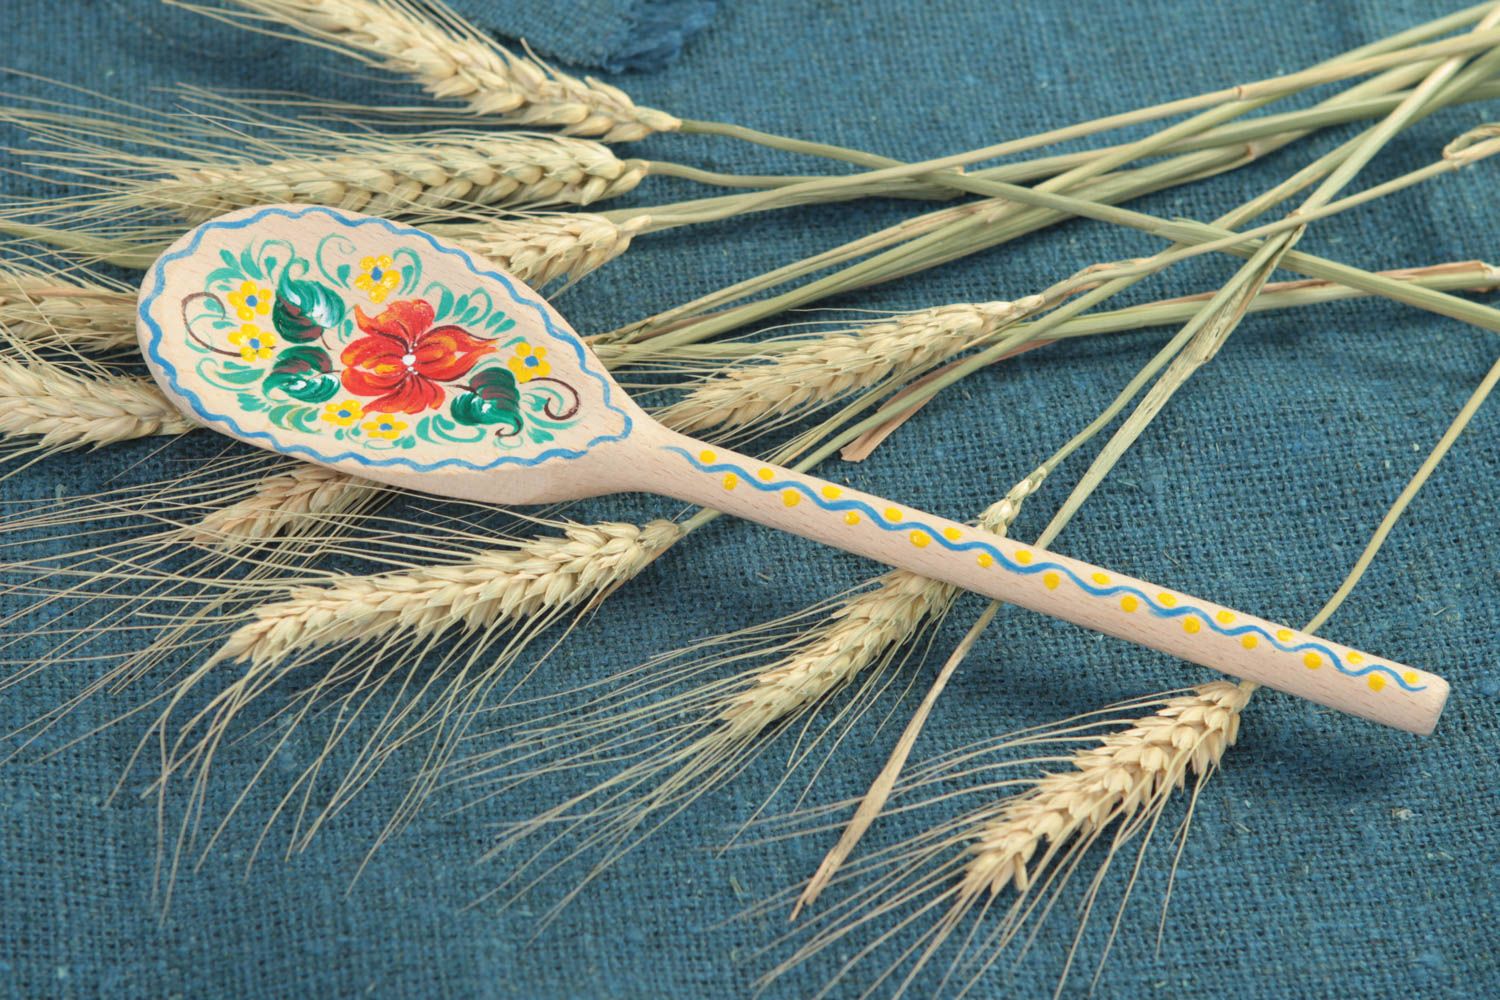 Ethnic spoon decoration ideas wooden cutlery unusual gift kitchen accessories photo 1